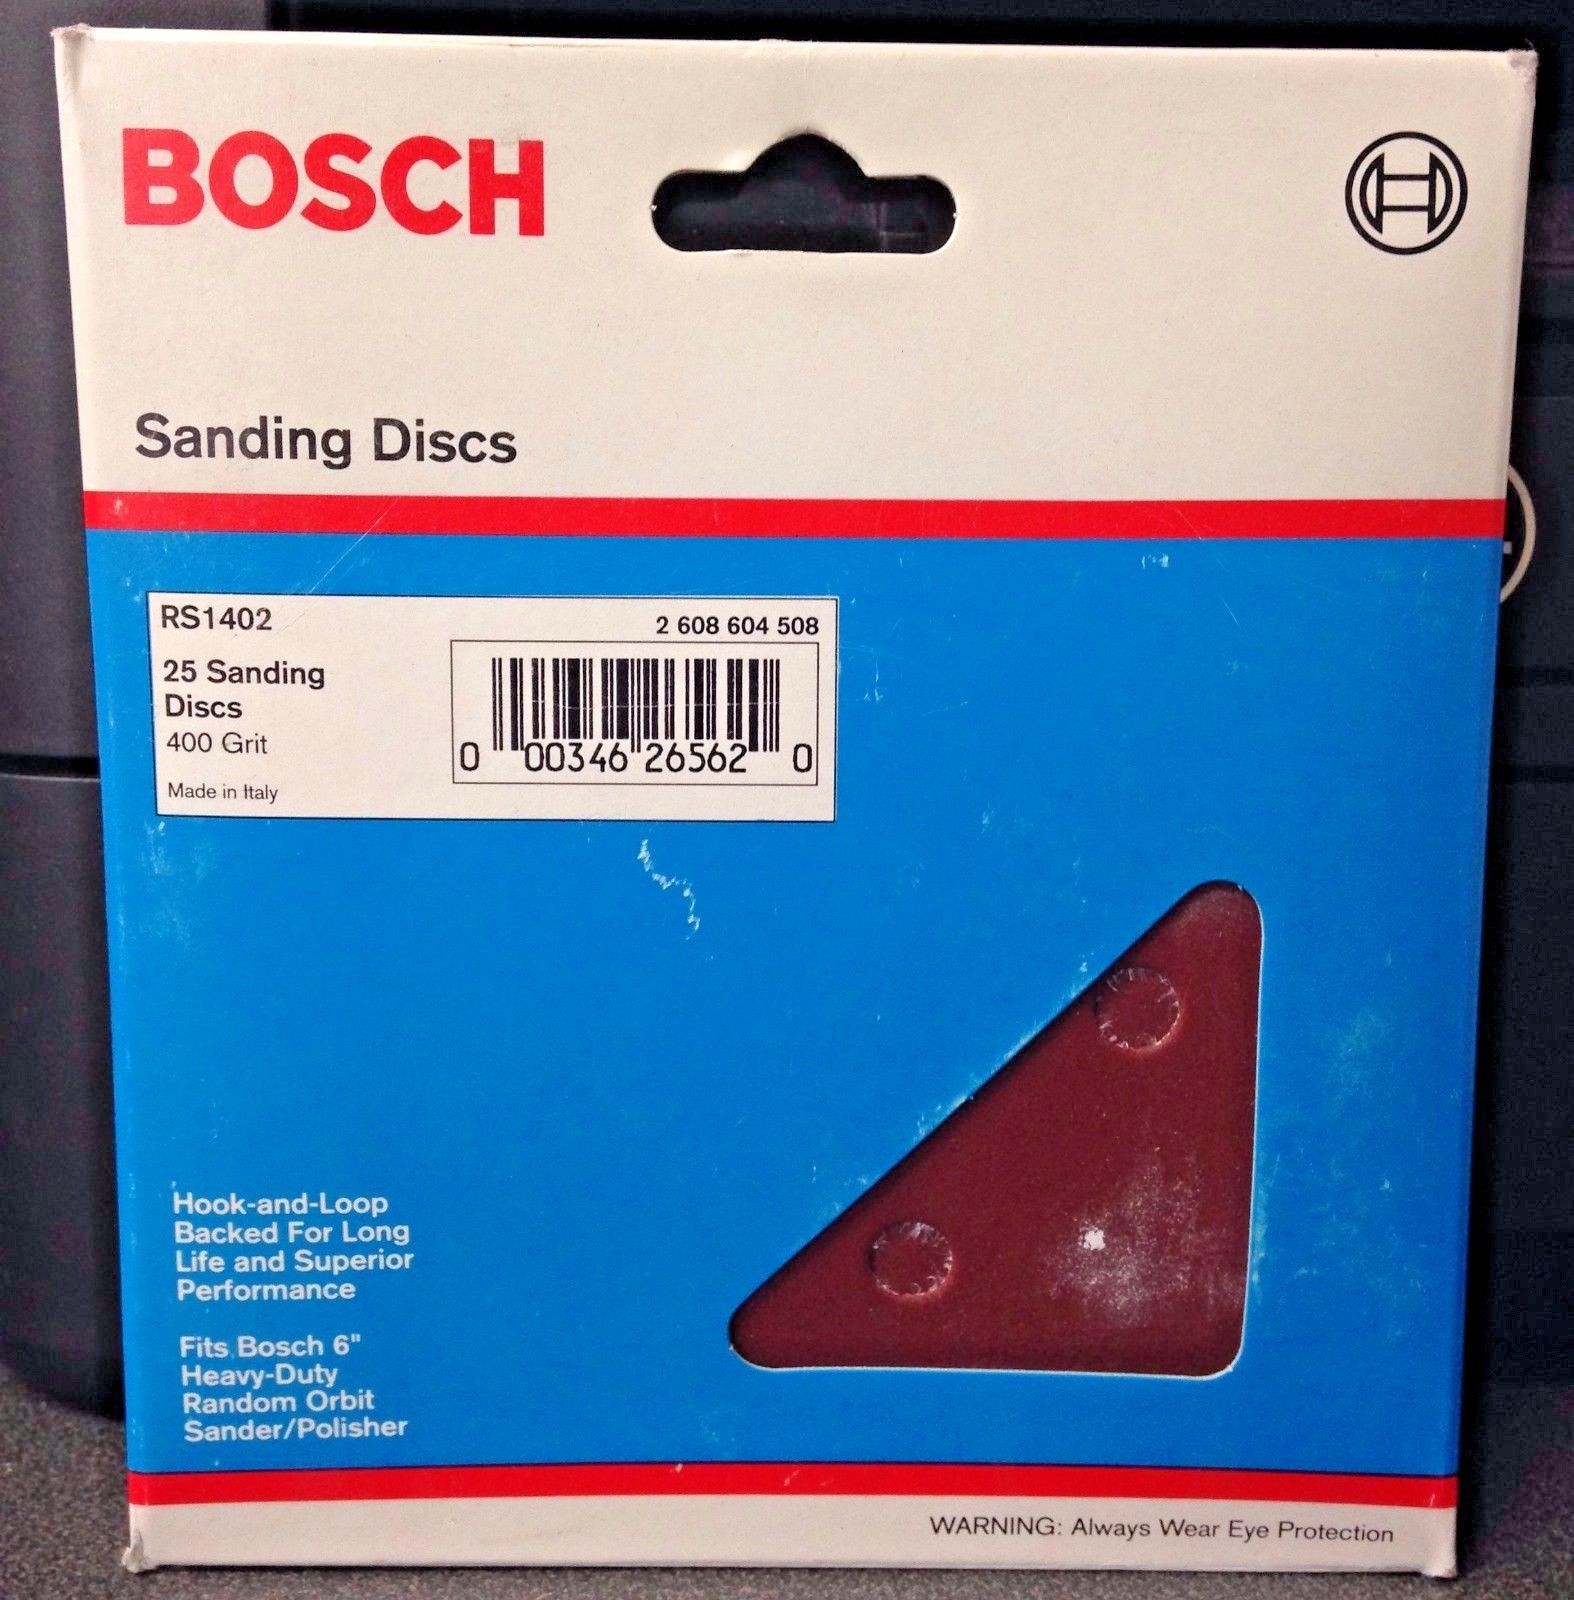 Bosch RS1402 6" Hook and Loop 400 Grit Sanding Discs 25 Pack